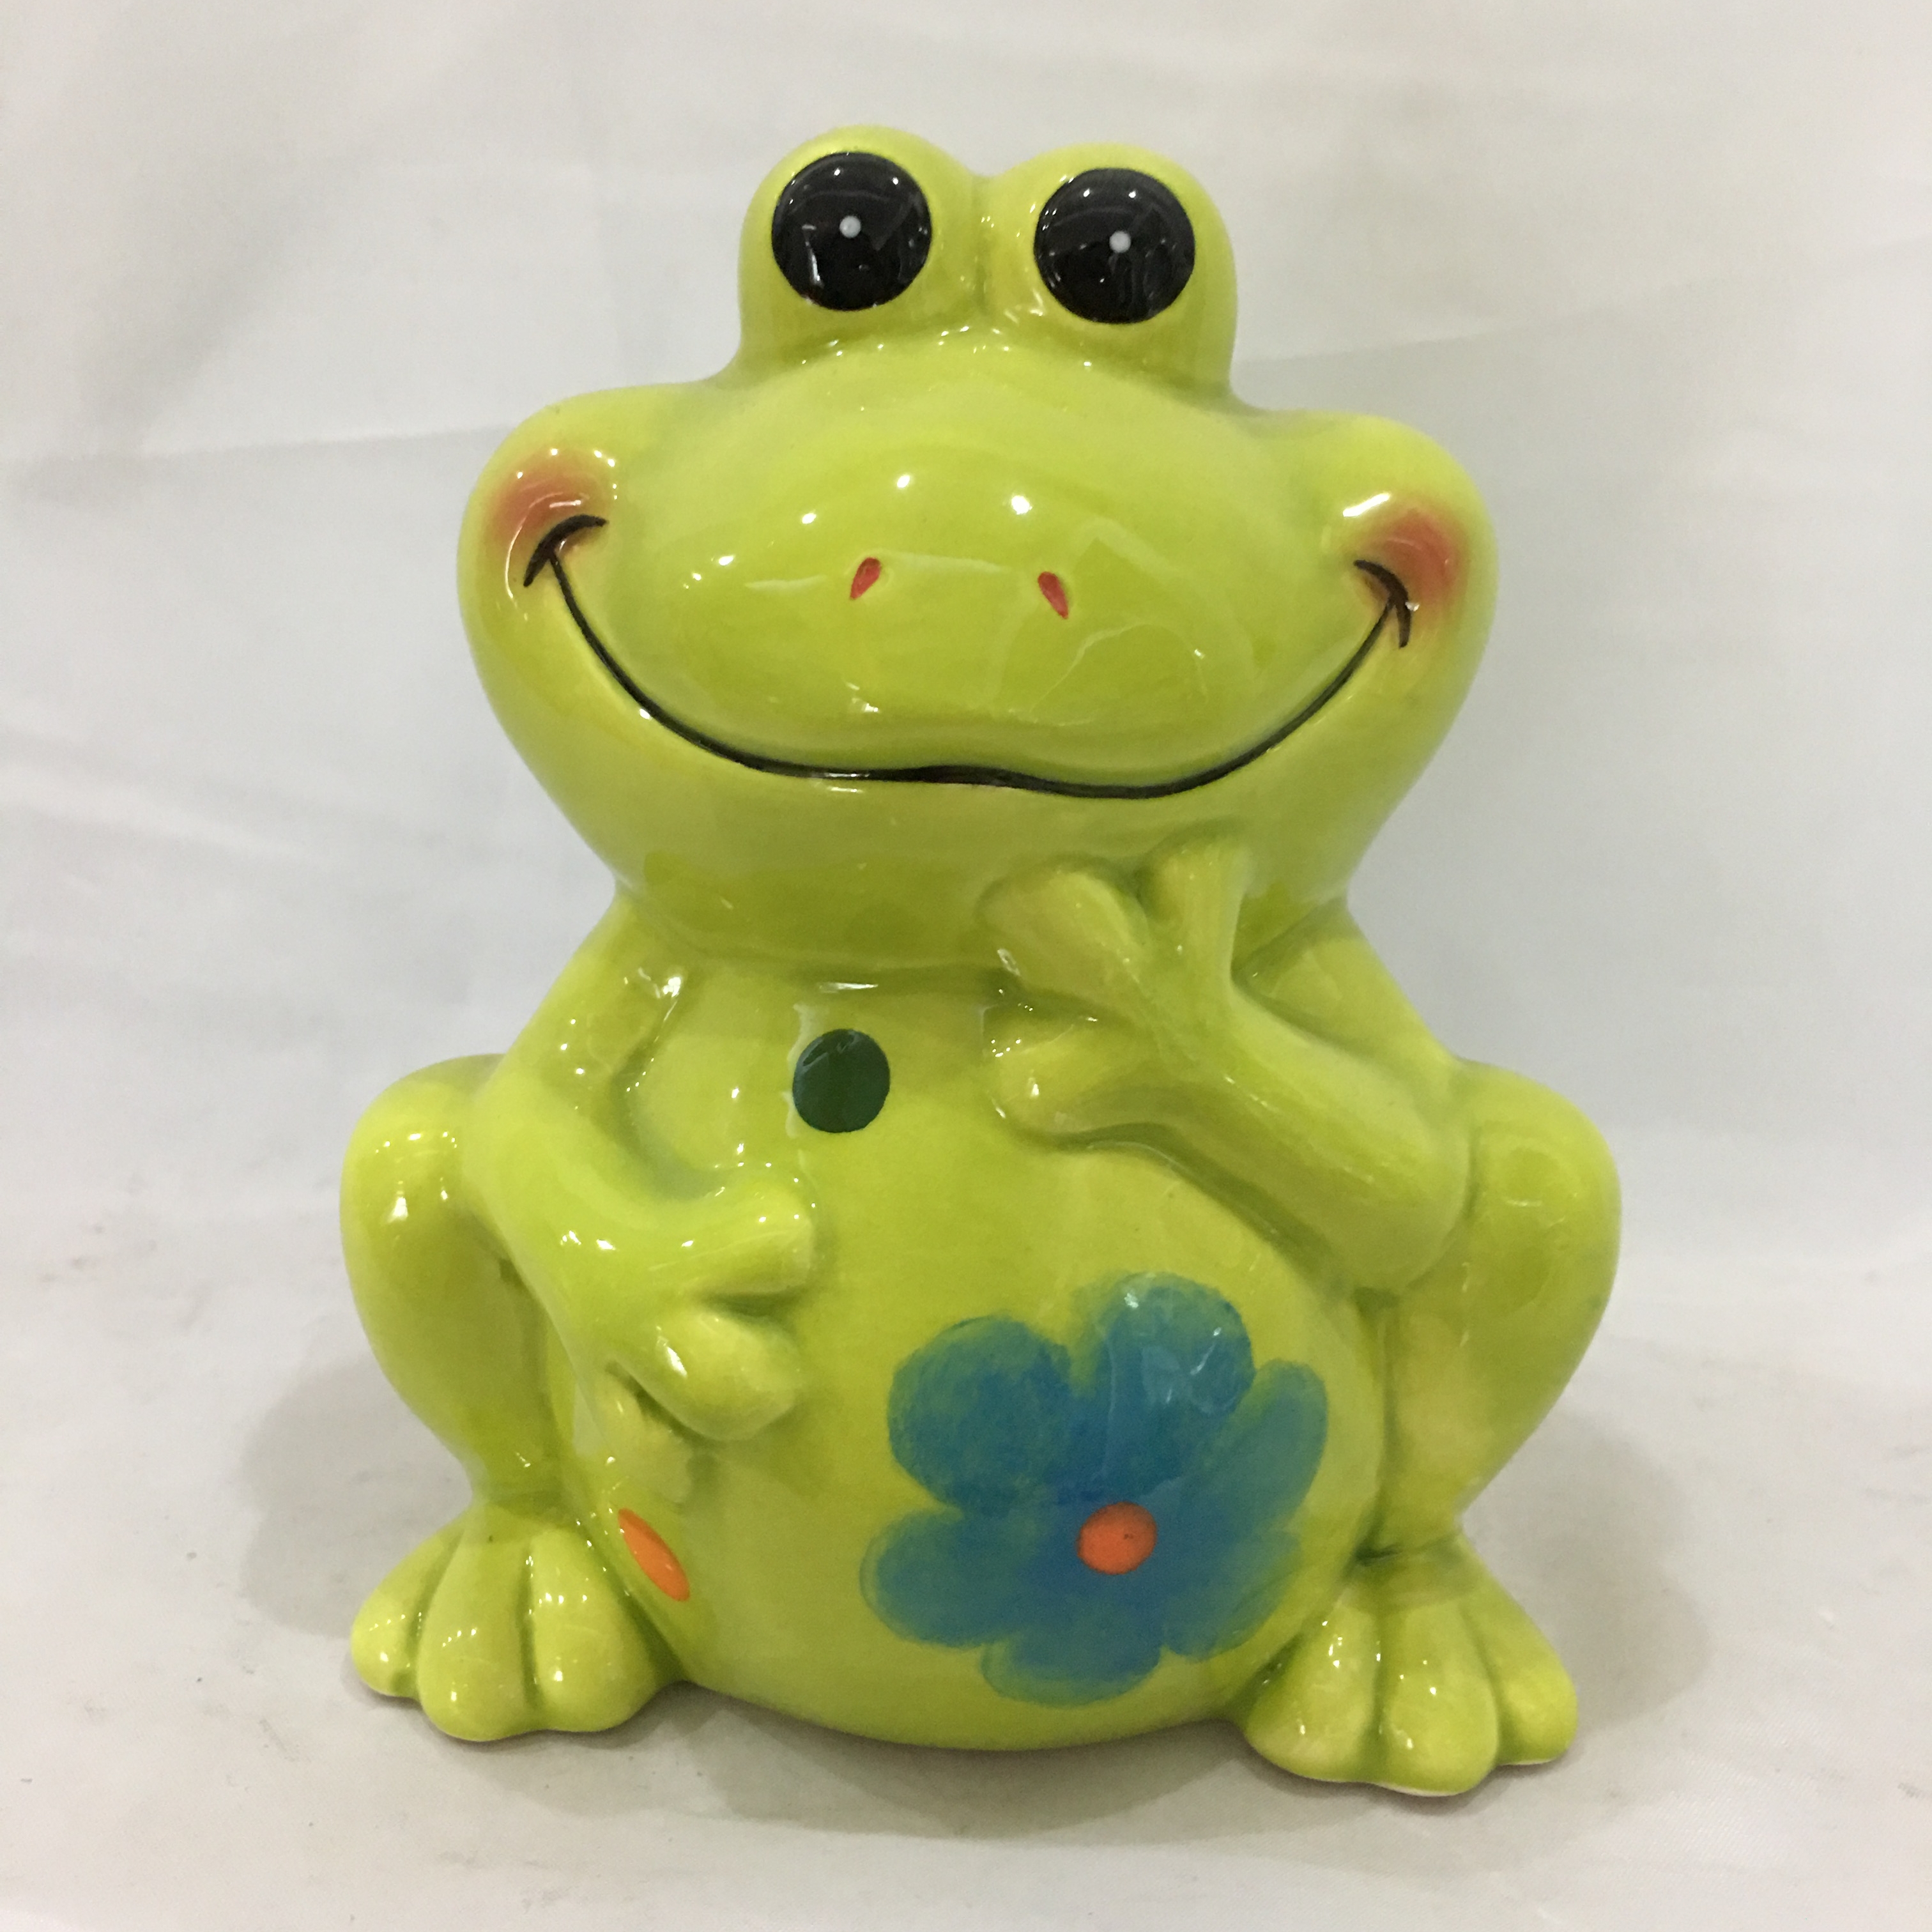 Hot sale green frog shape ceramic coin bank animal design money box